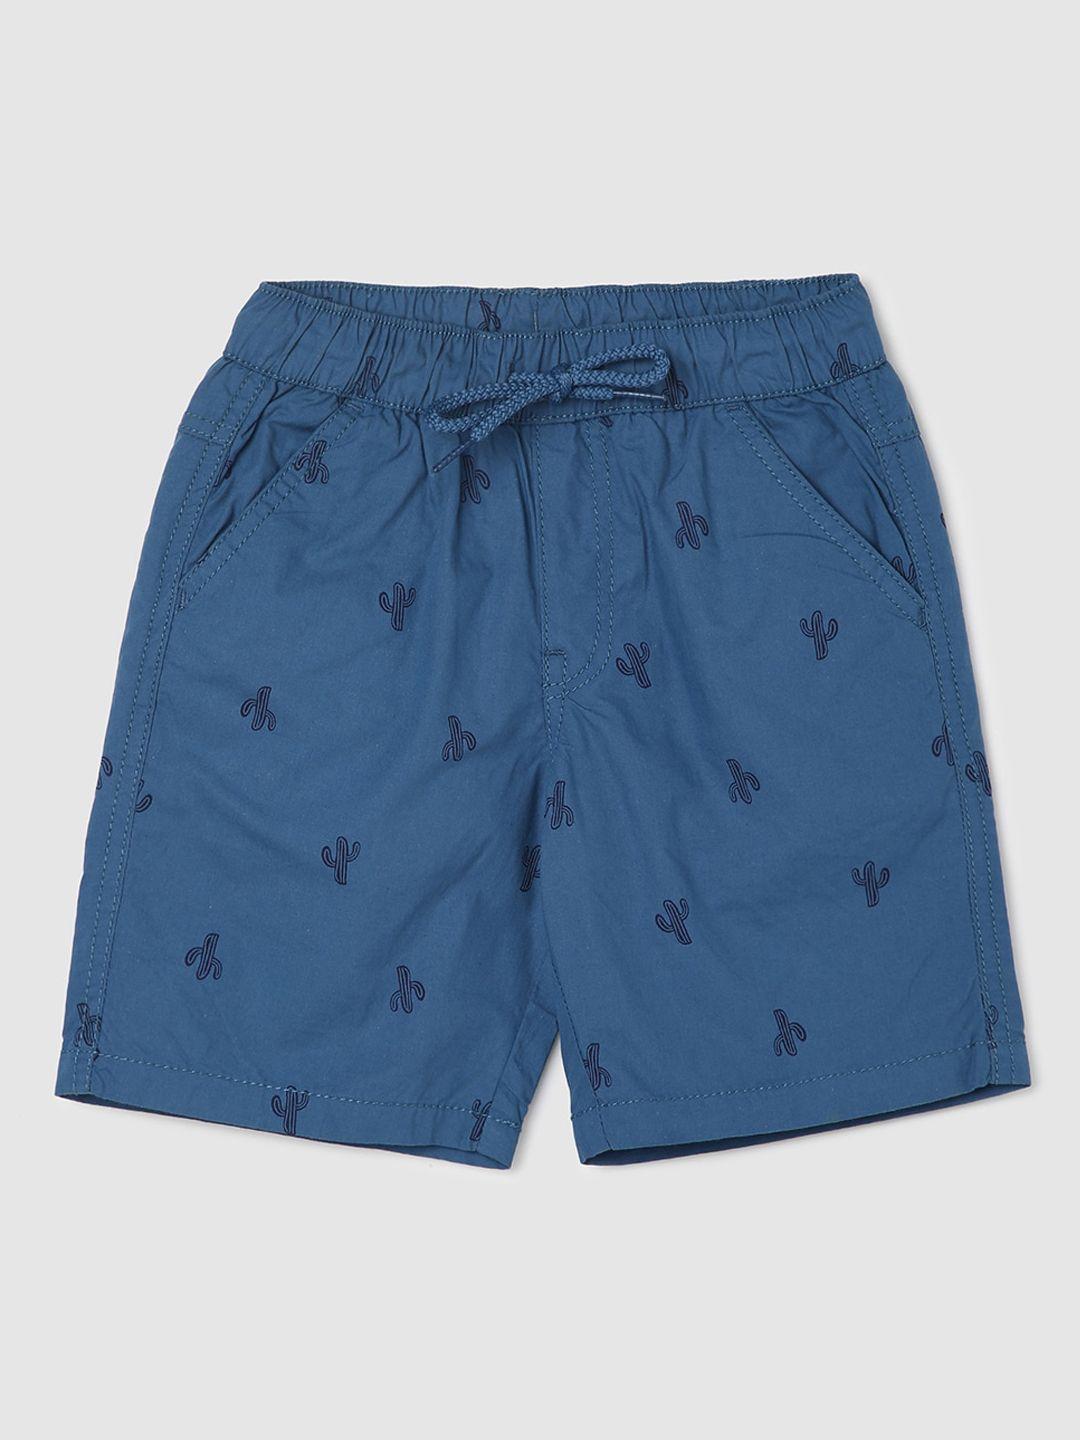 max boys conversational printed pure cotton mid-rise shorts